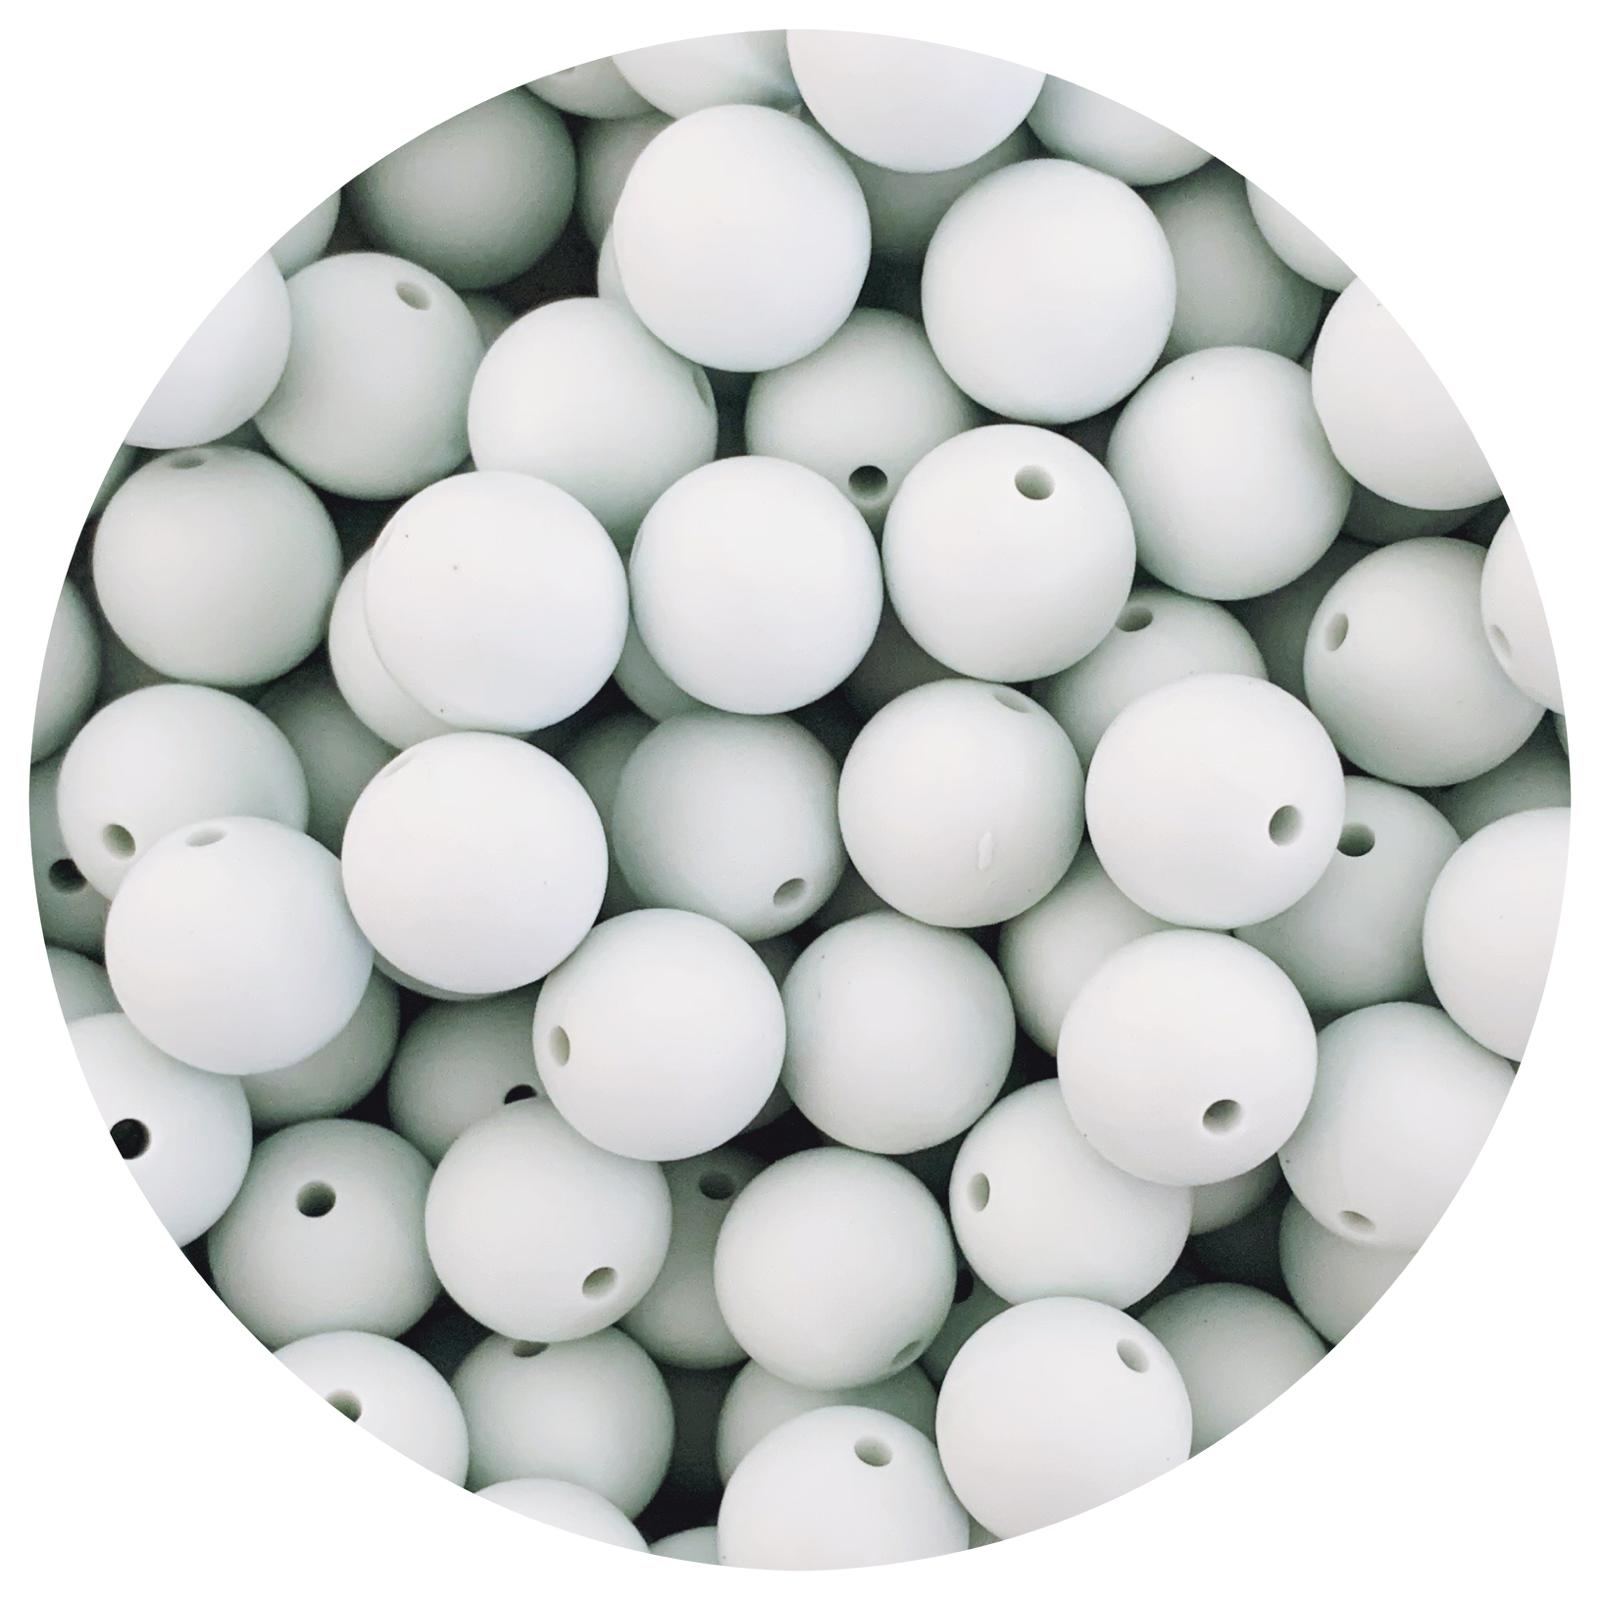 Seabreeze - 15mm round - 10 Beads